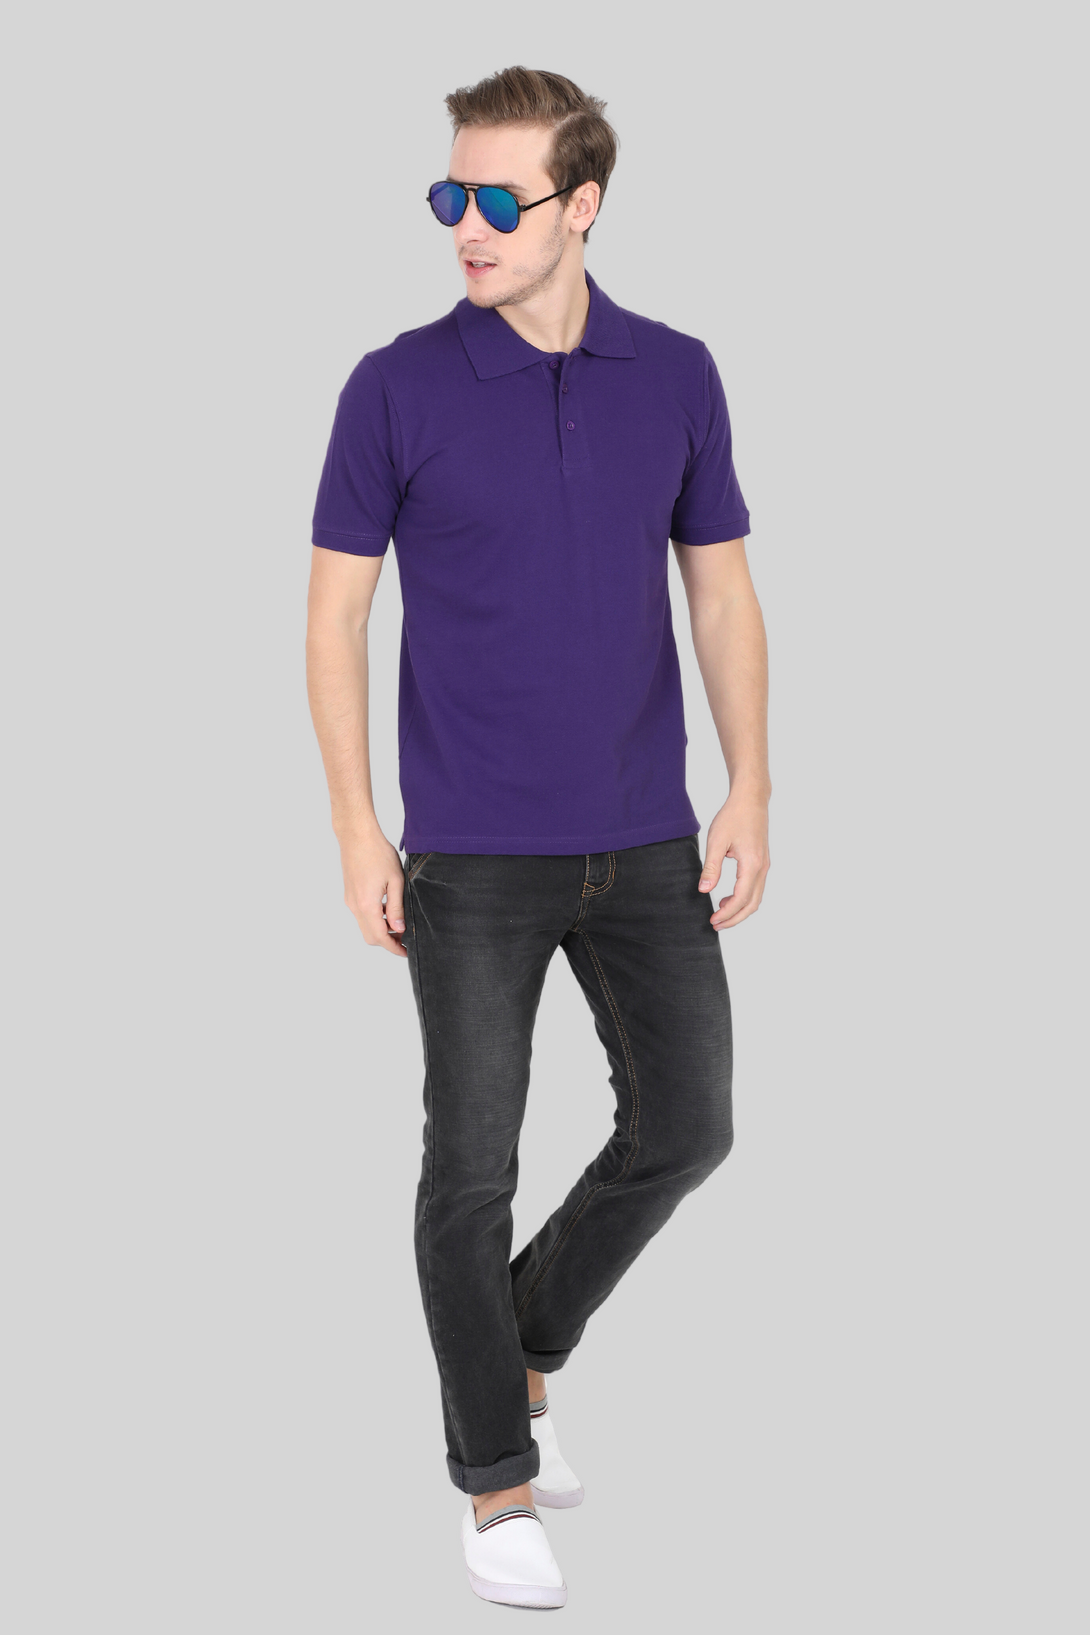 Purple Polo T-Shirt For Men - WowWaves - 6